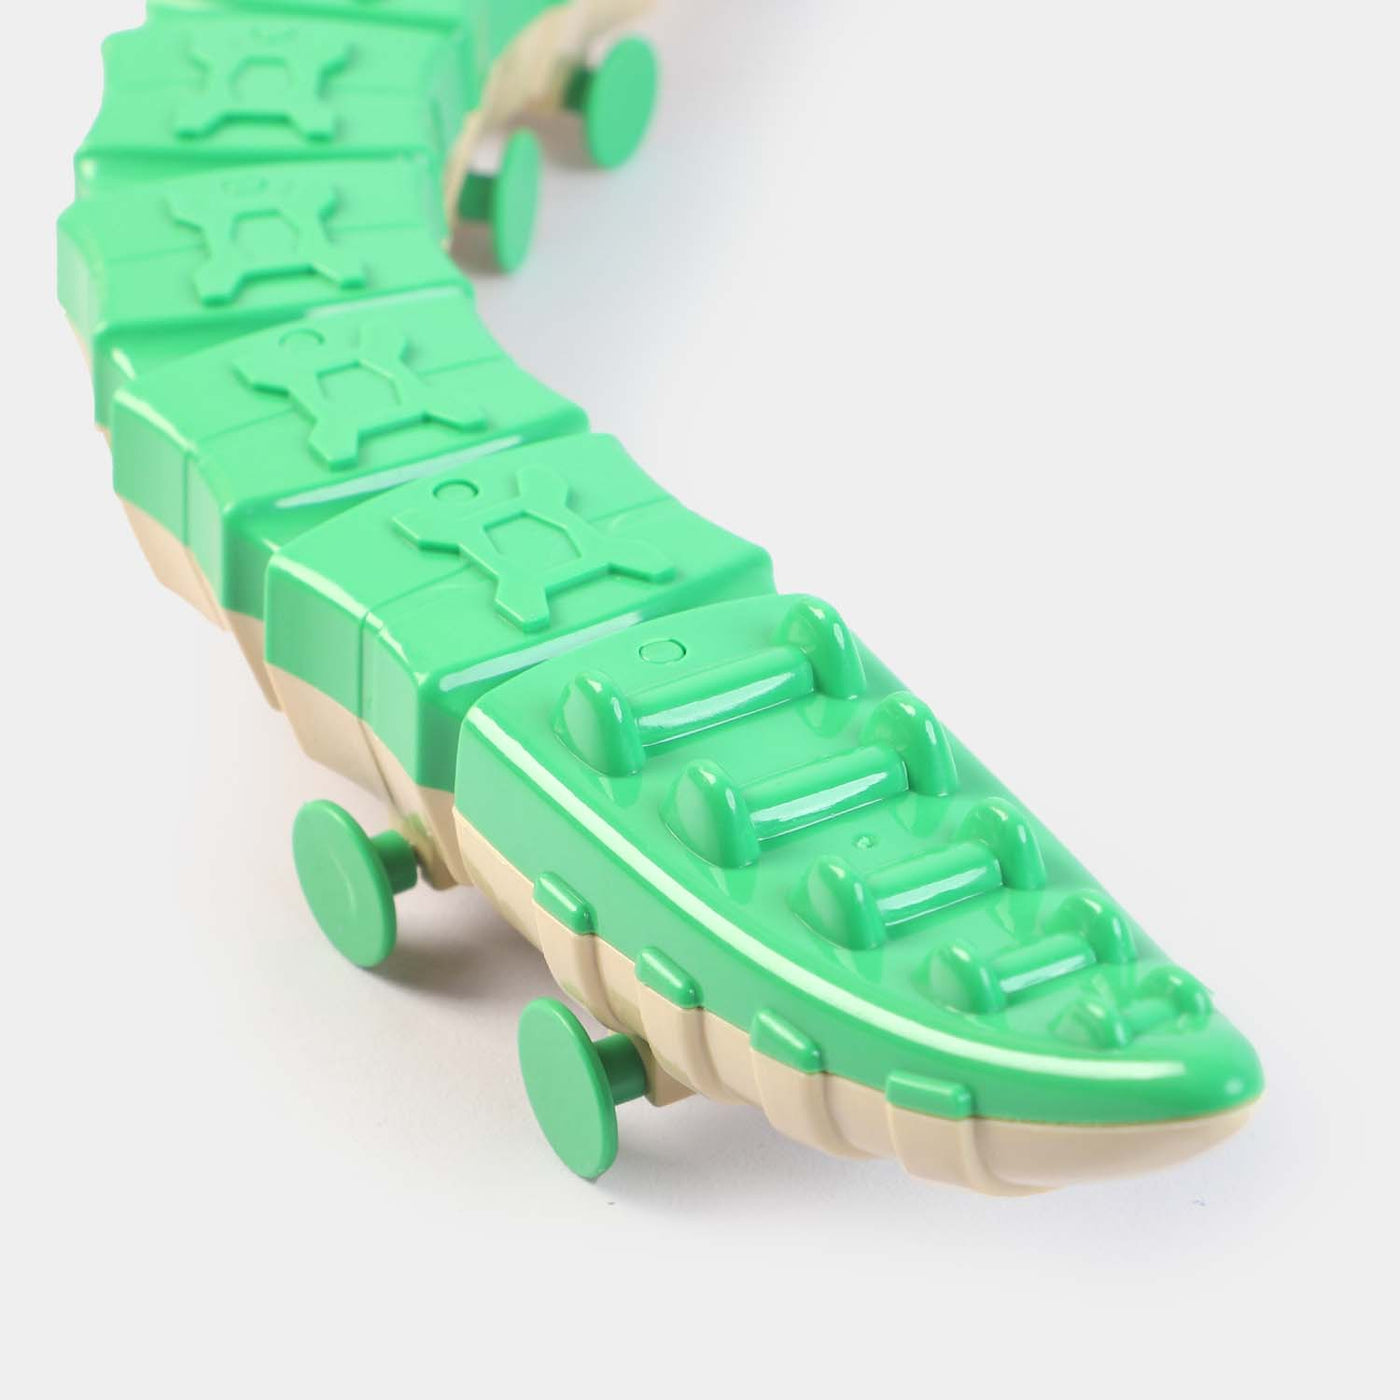 Crocodile Walking Toy For Kids